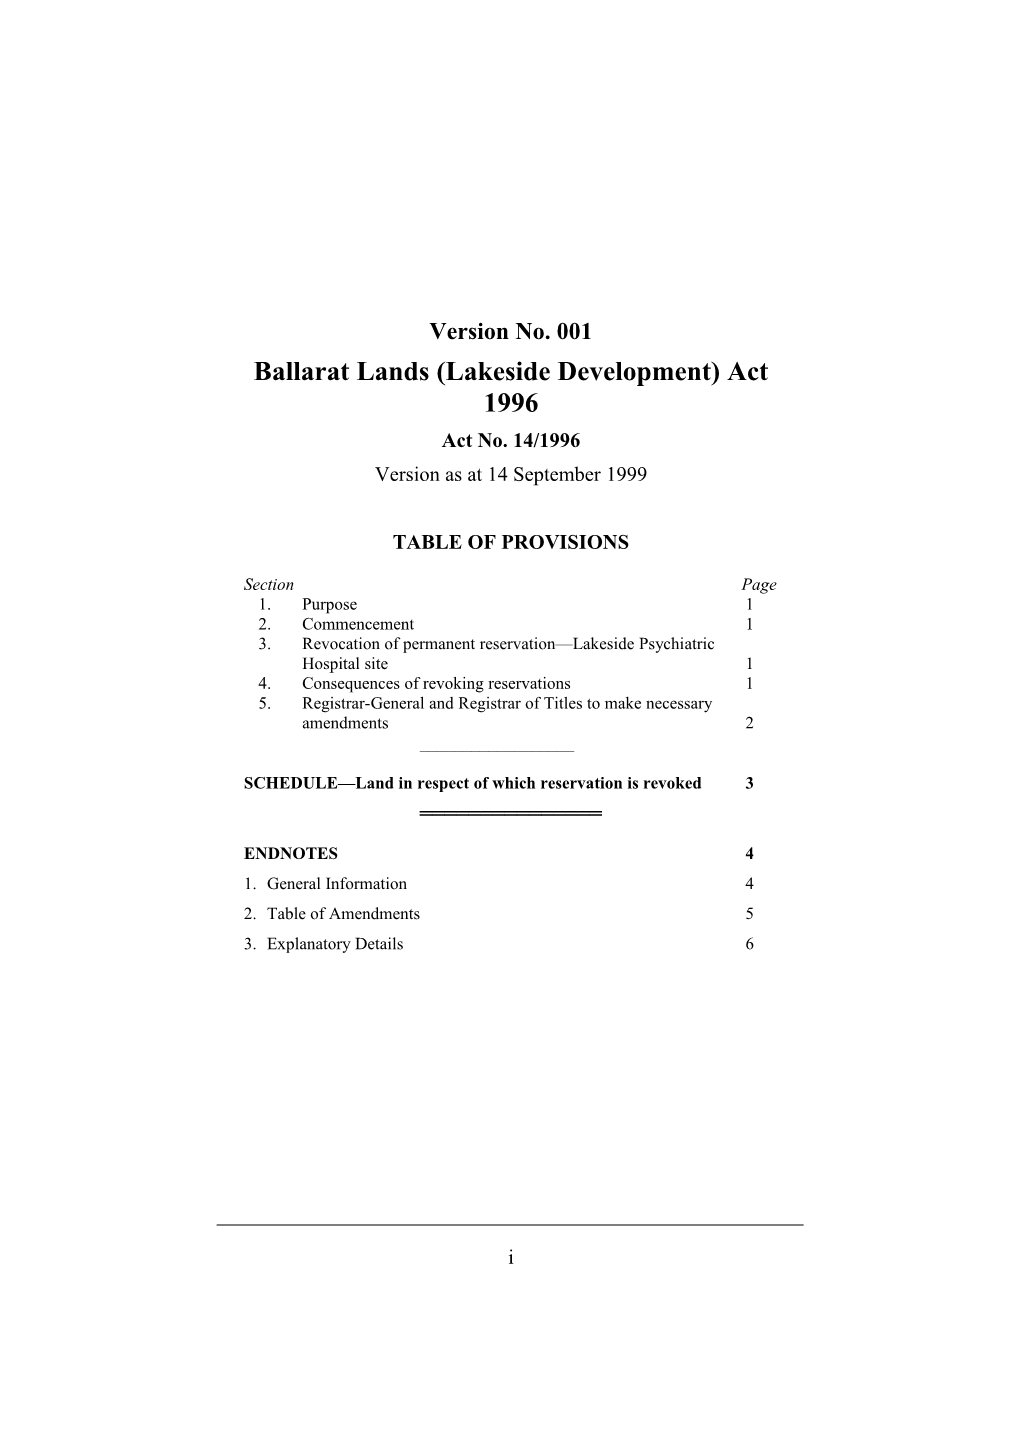 Ballarat Lands (Lakeside Development) Act 1996